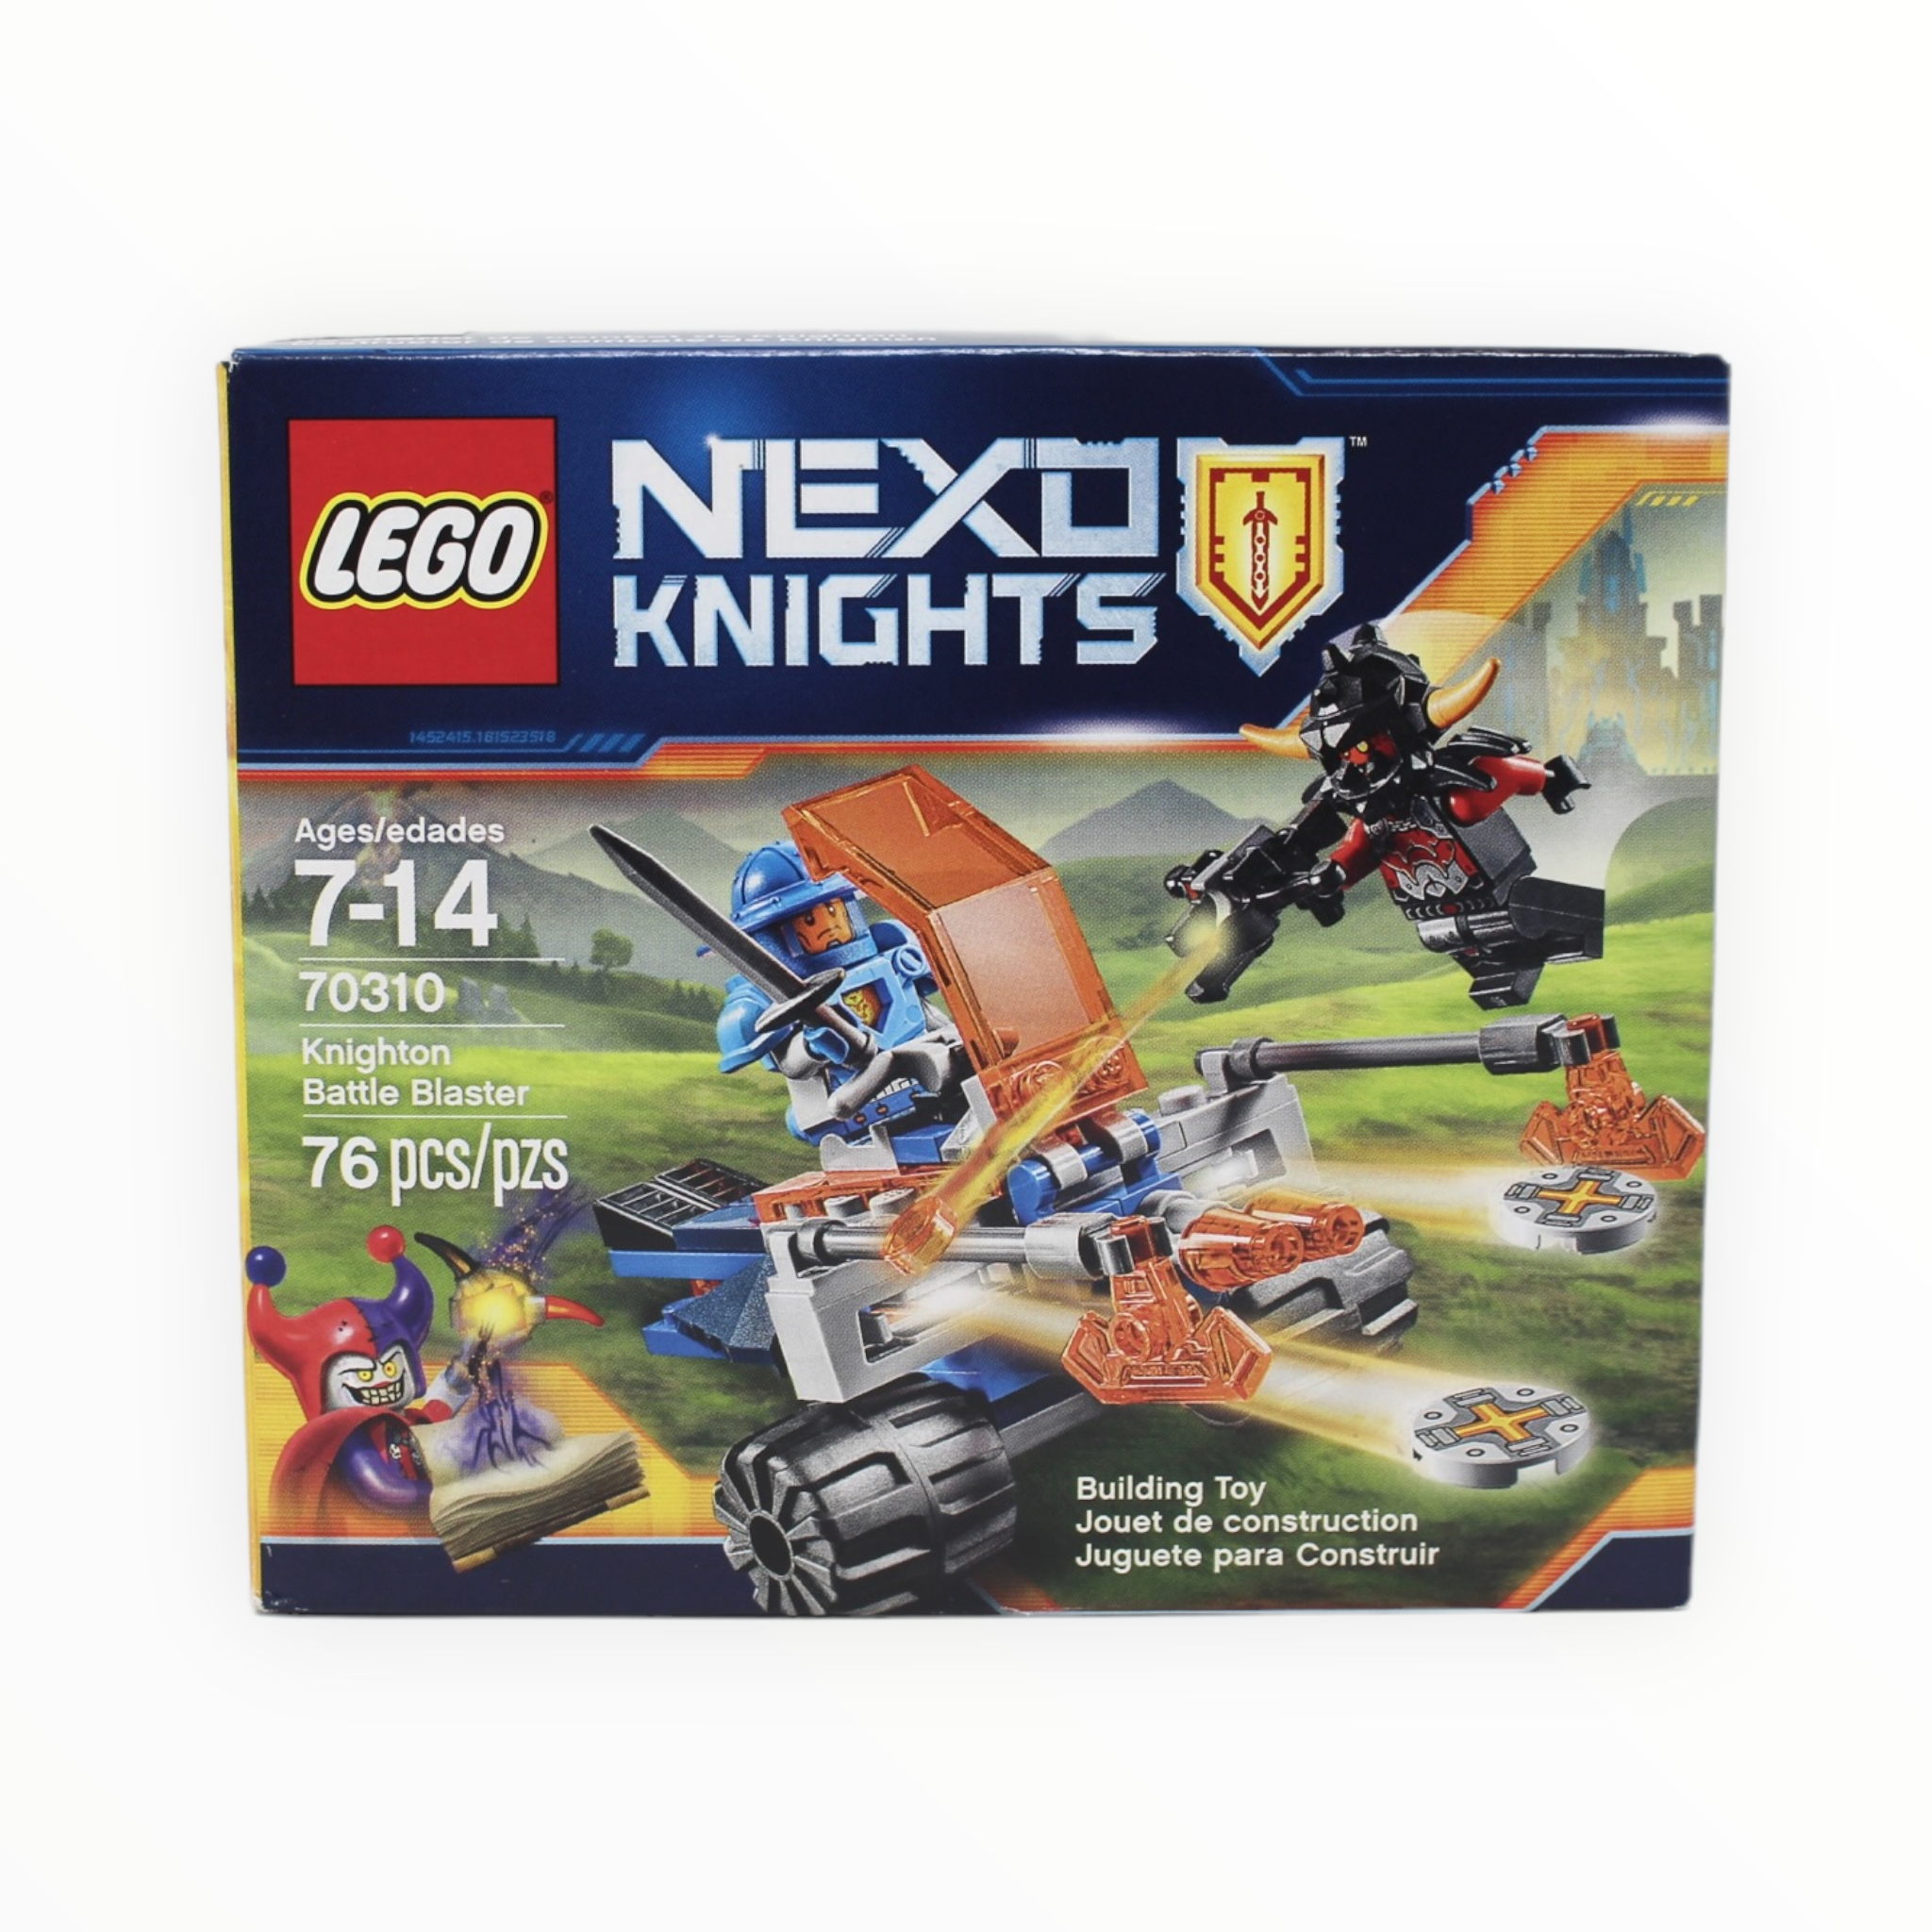 Certified Used Set 70310 Nexo Knights Knighton Battle Blaster